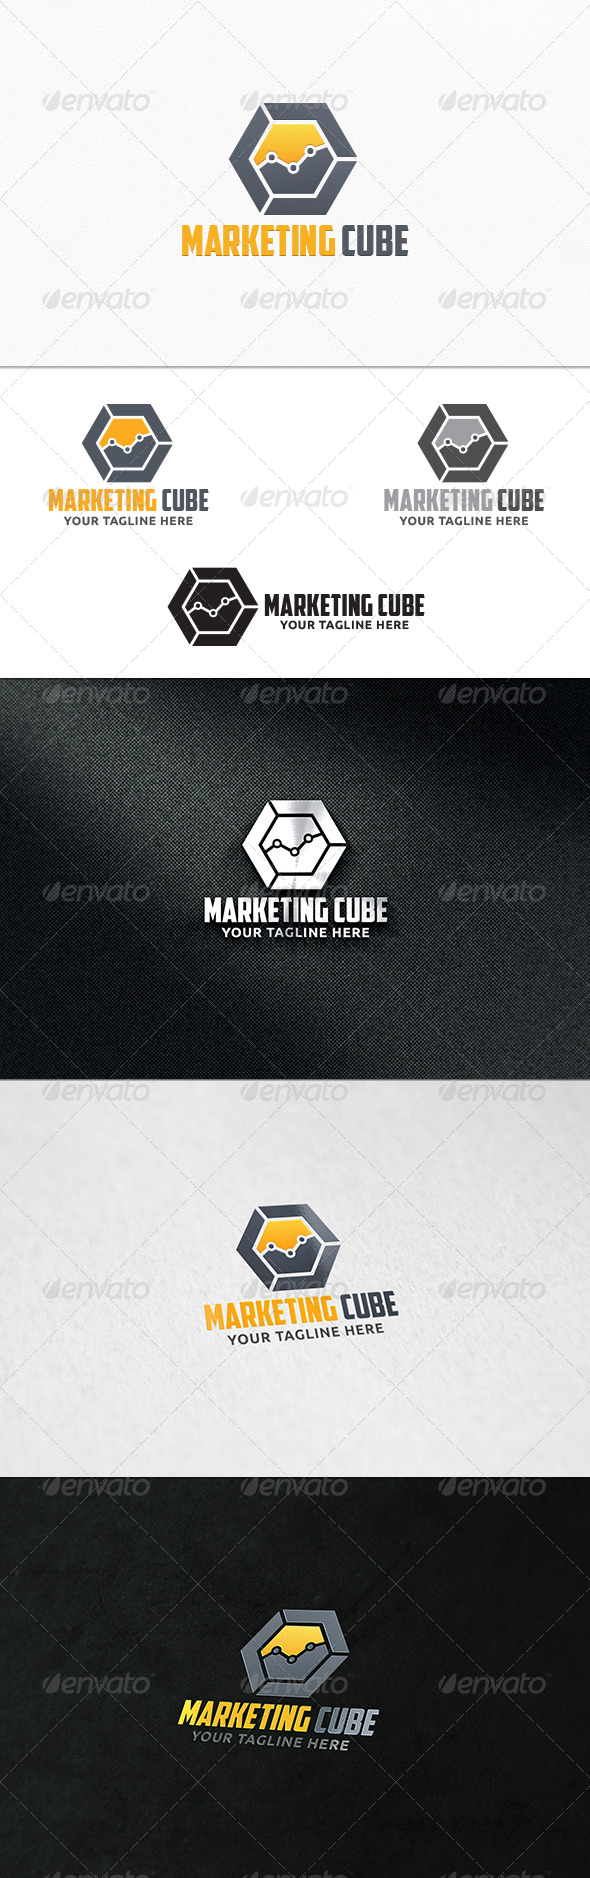 Marketing Cube - Logo Template